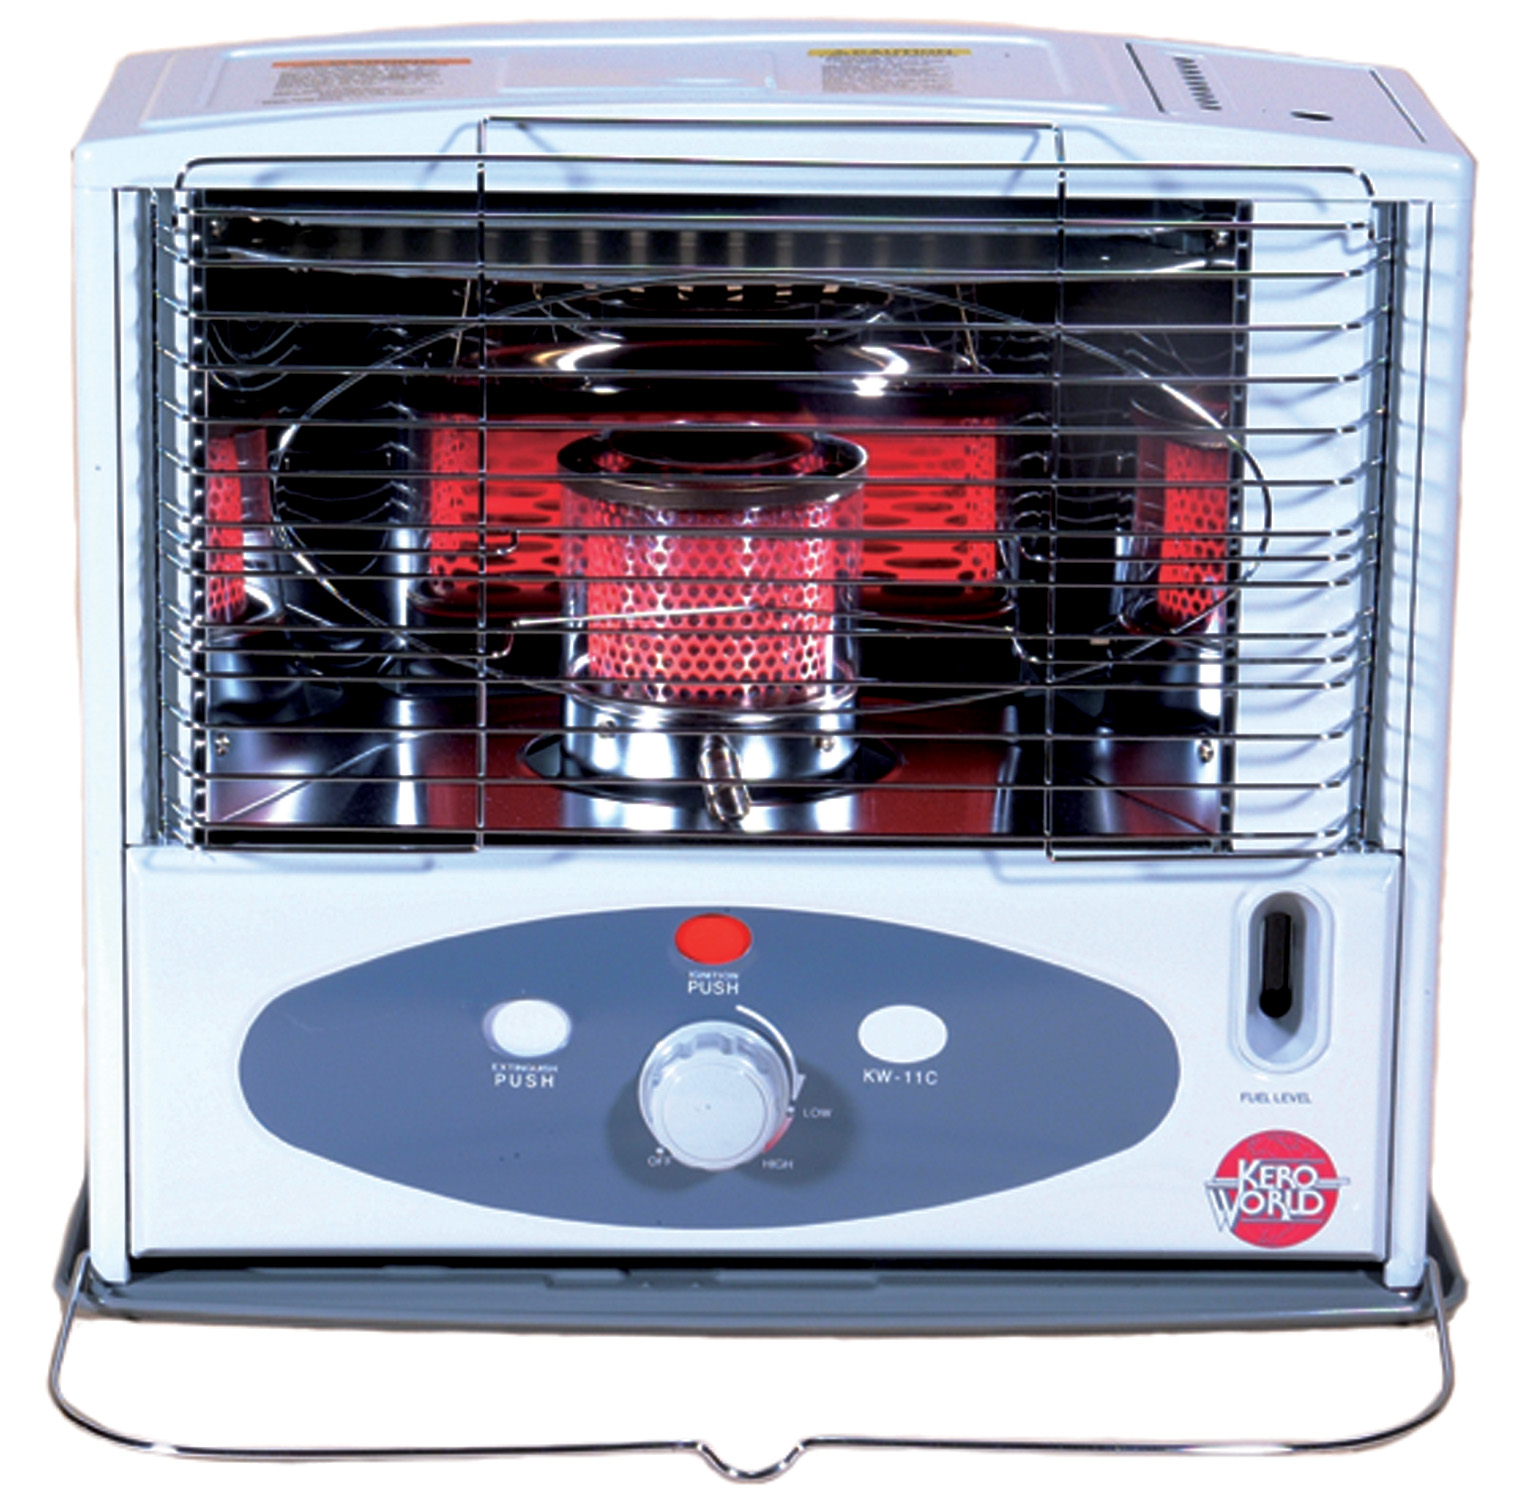 World Marketing KW 11F 10,000 BTU Radiant Heat Indoor Kerosene Heater